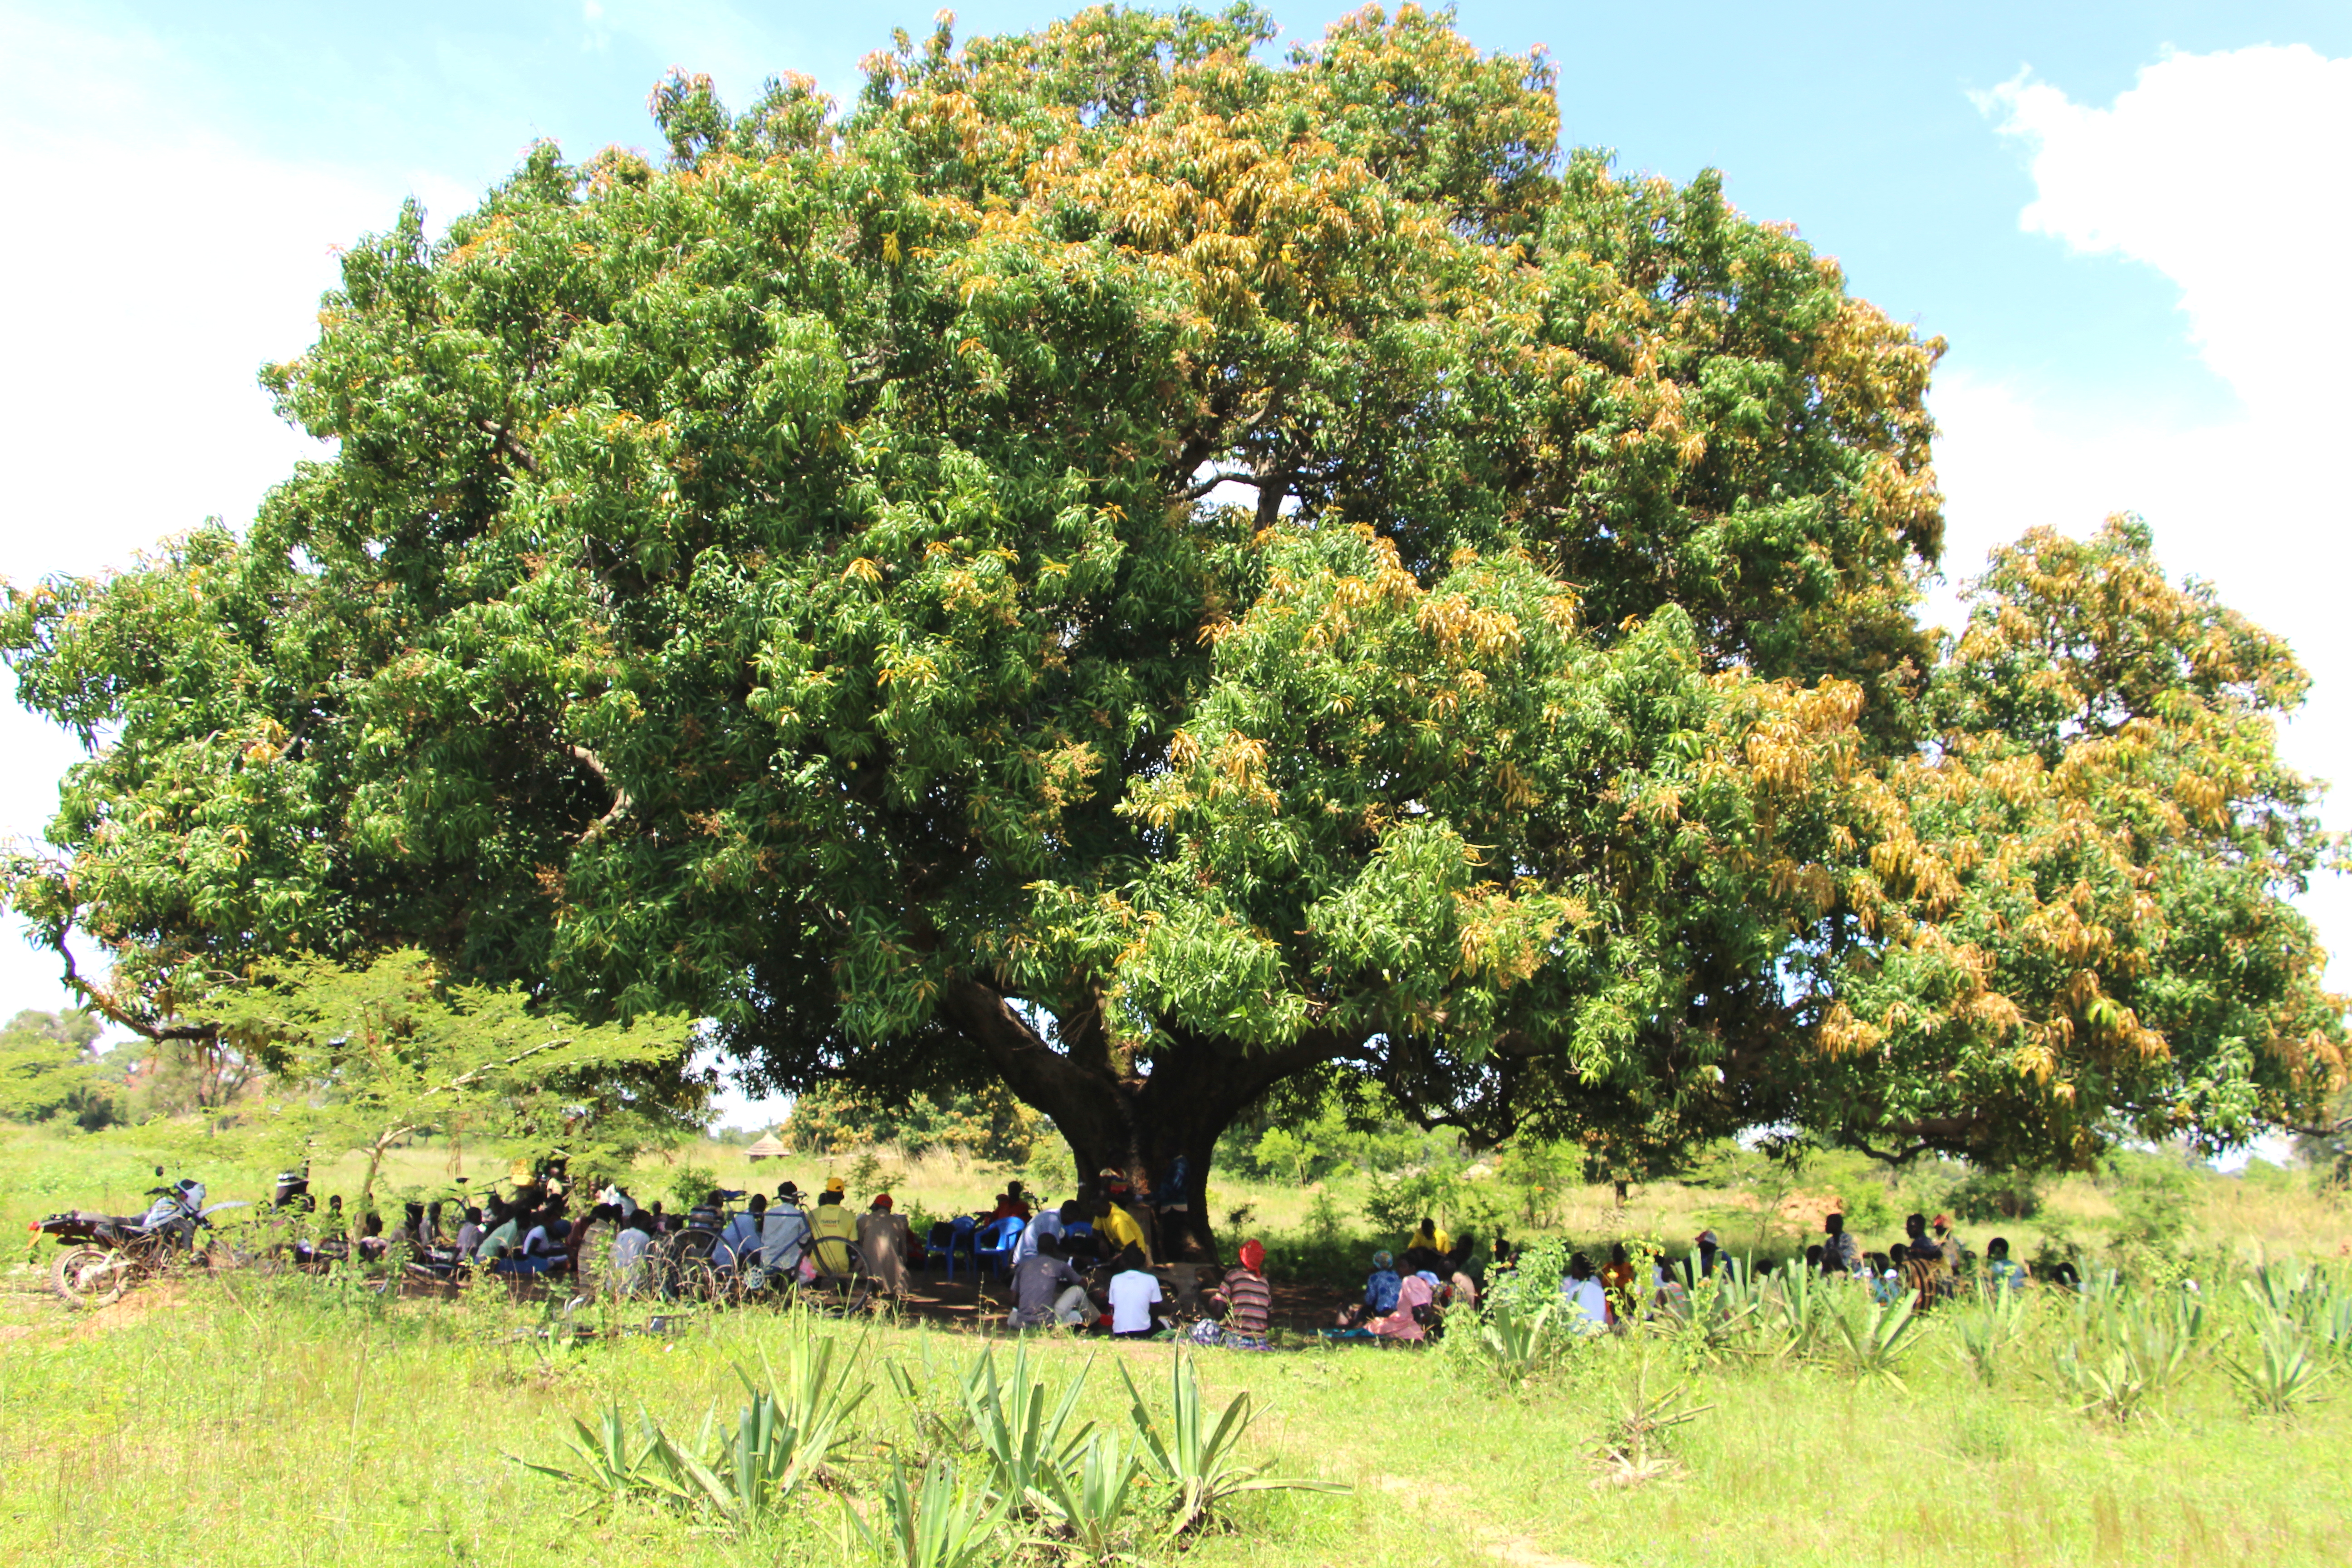 Village Enterprise Business Owners under a tree in Akisim, Uganda.